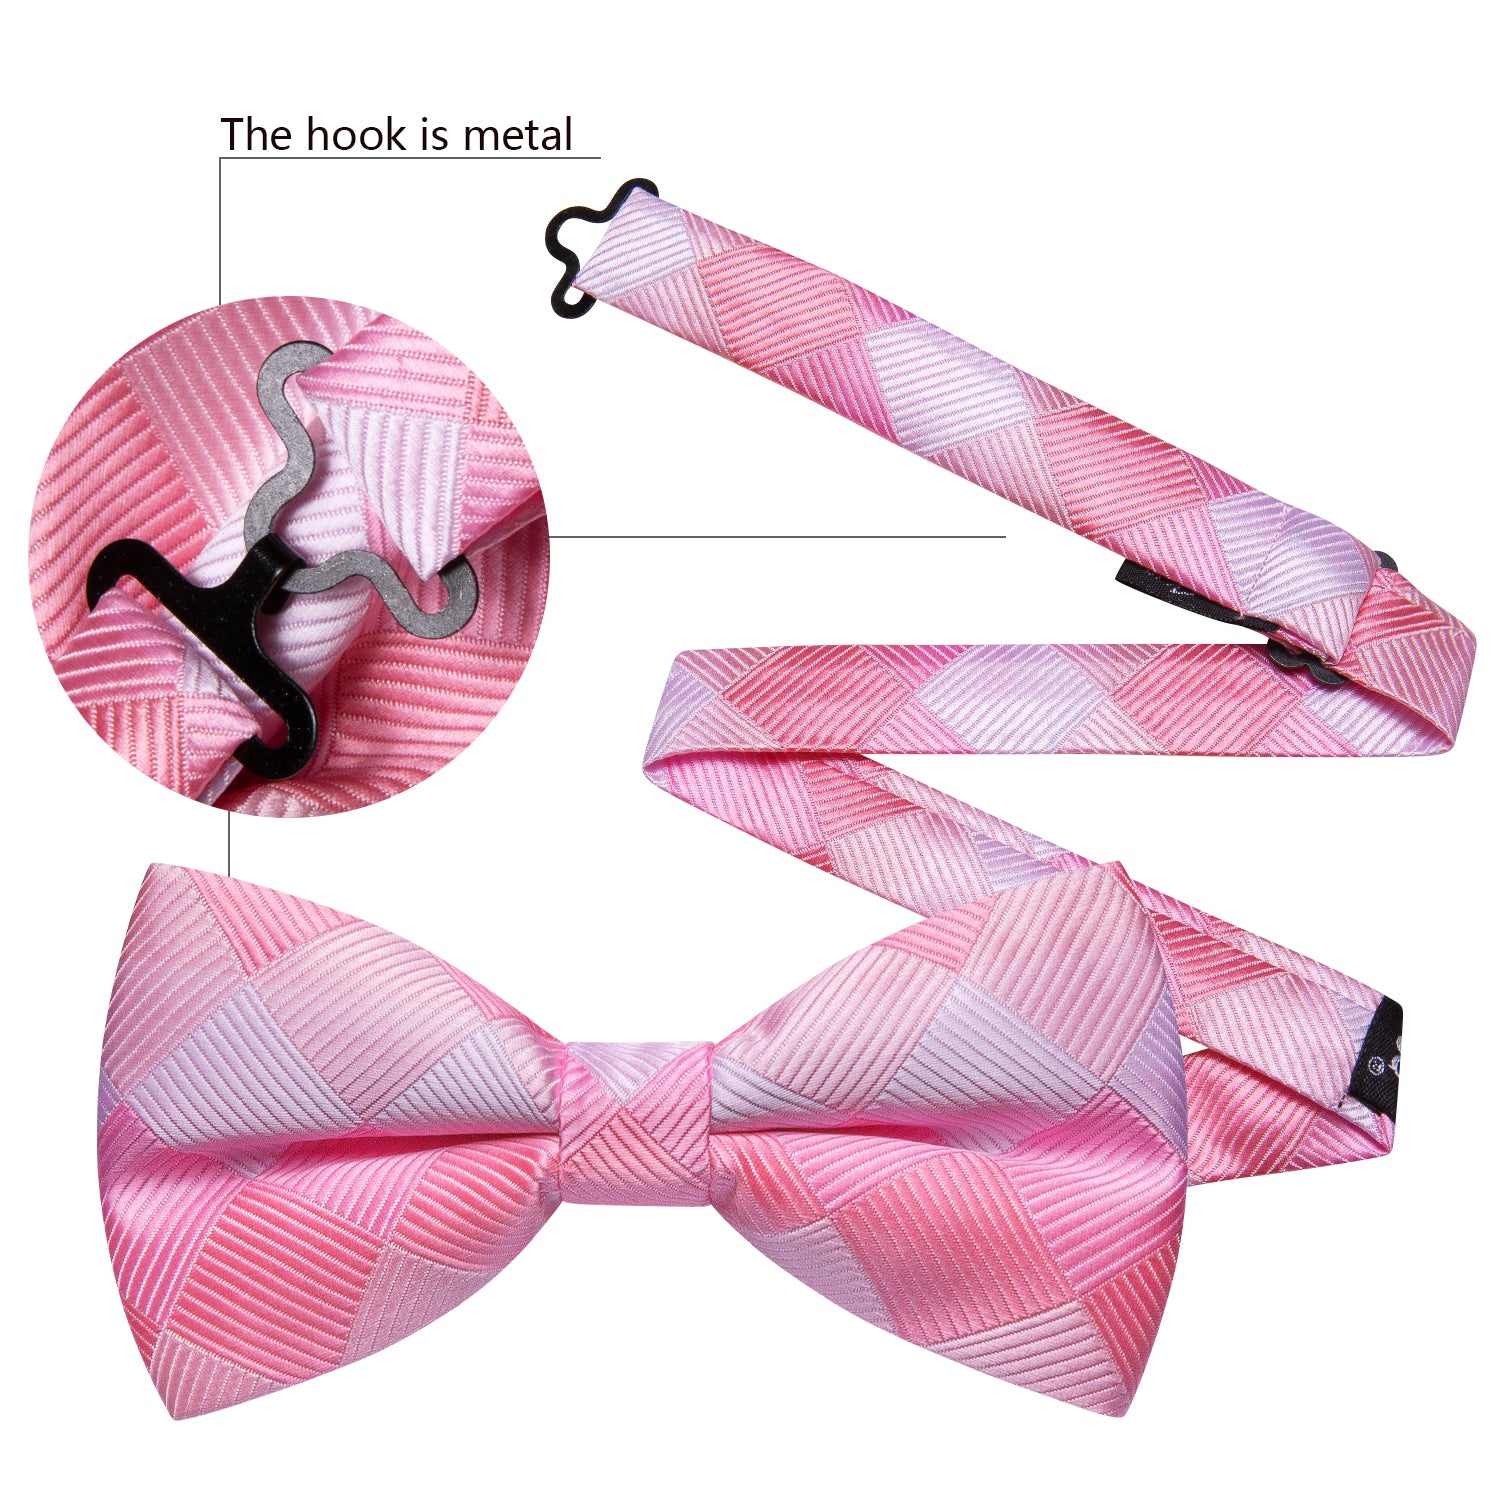 Pink White Plaid Silk Pre Tied Bow Tie Hanky Cufflinks Set